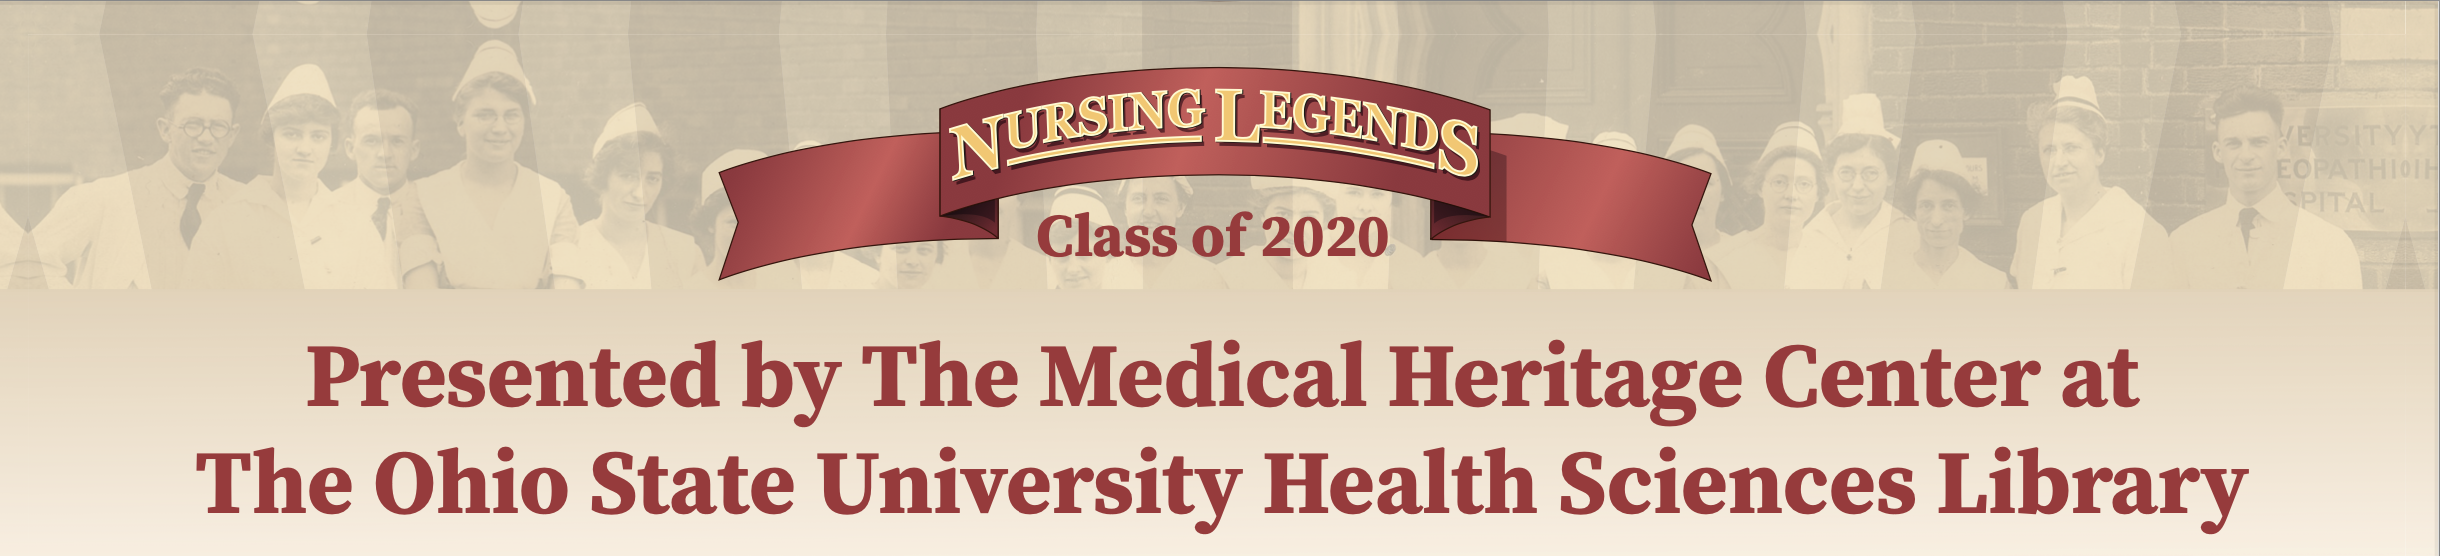 Class of 2020 Nursing Legends Header Image